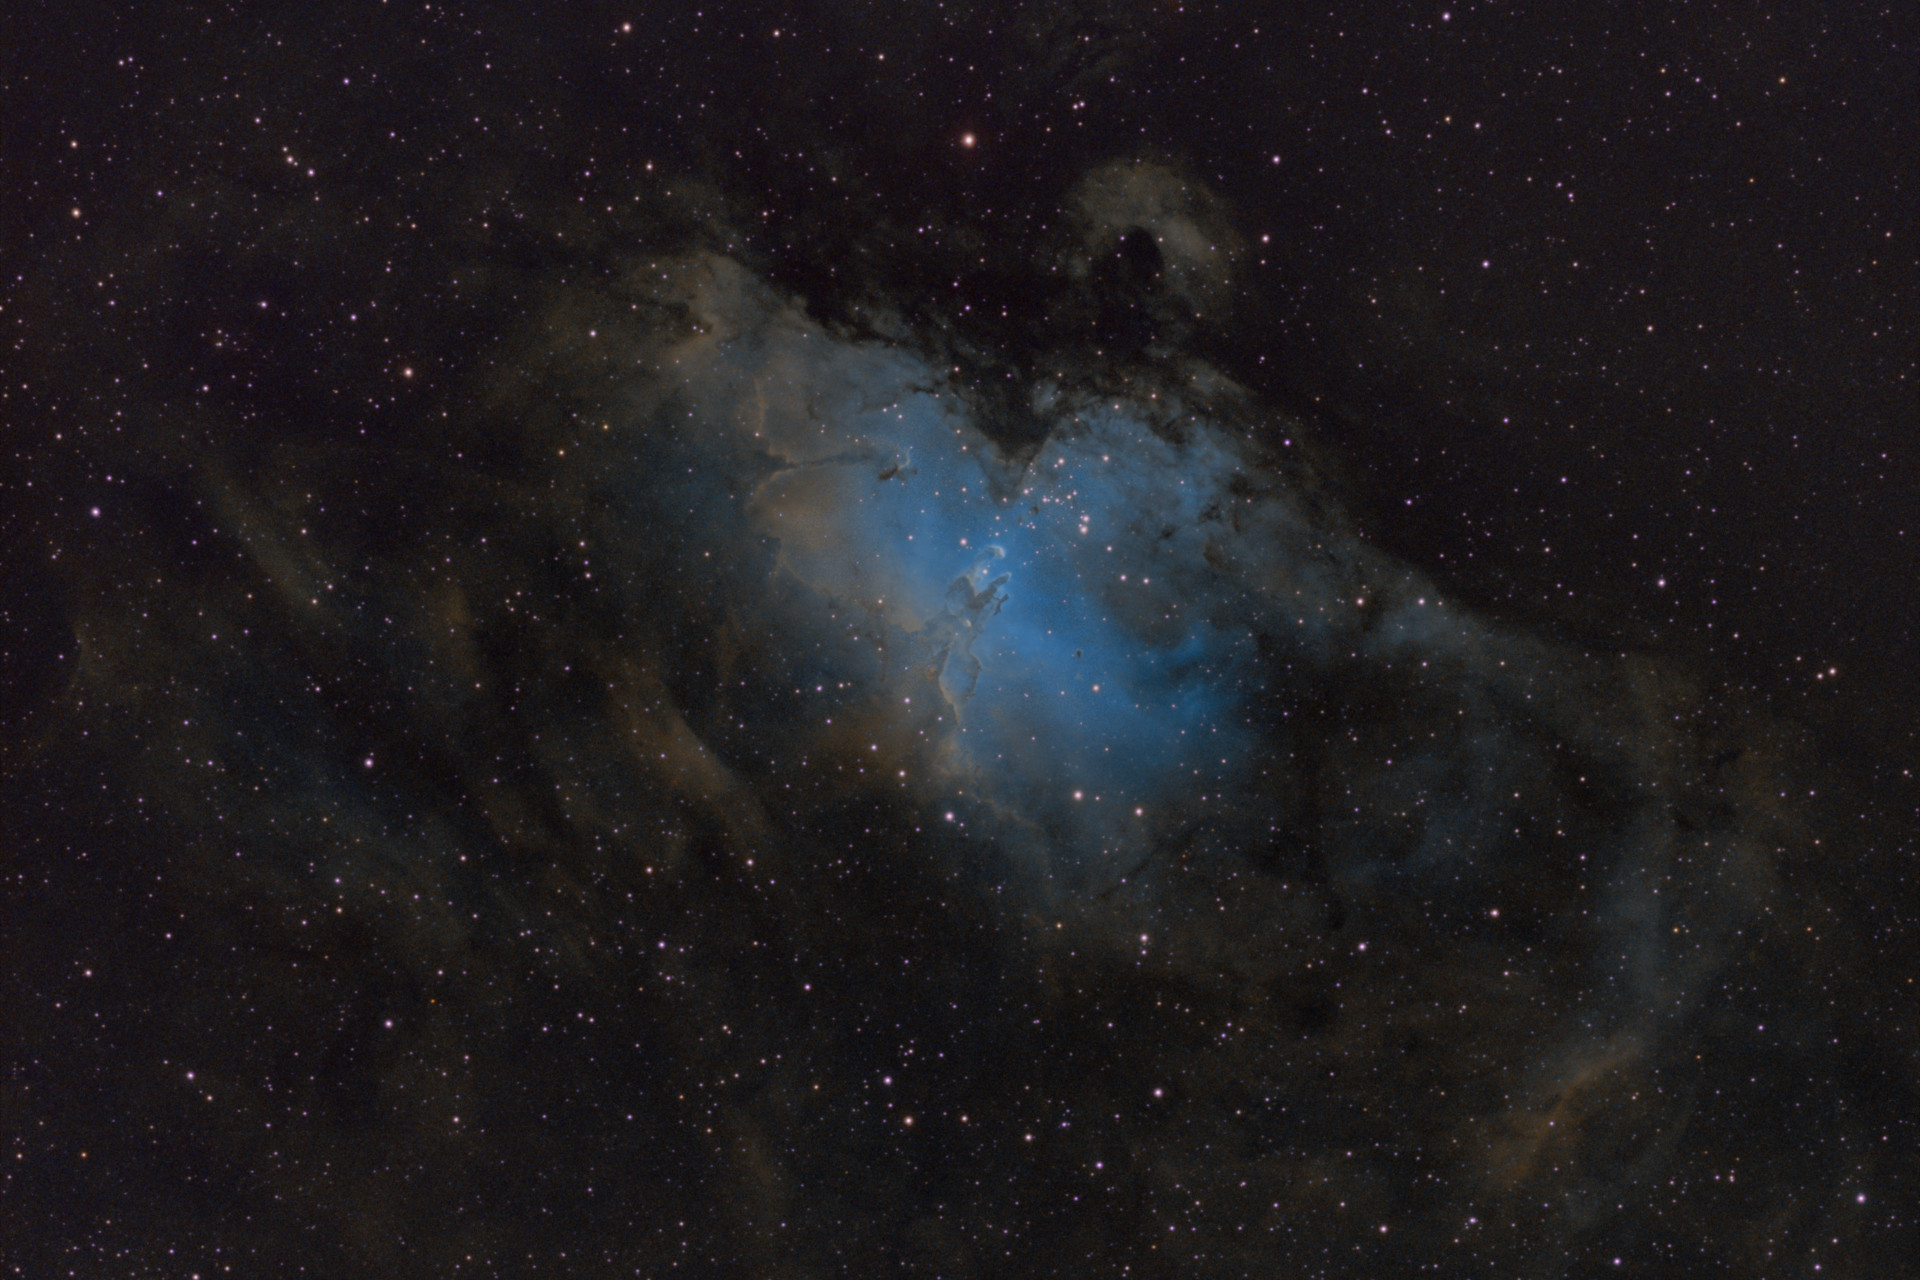 Messier 16 - Eagle Nebula & The Pillars of Creation